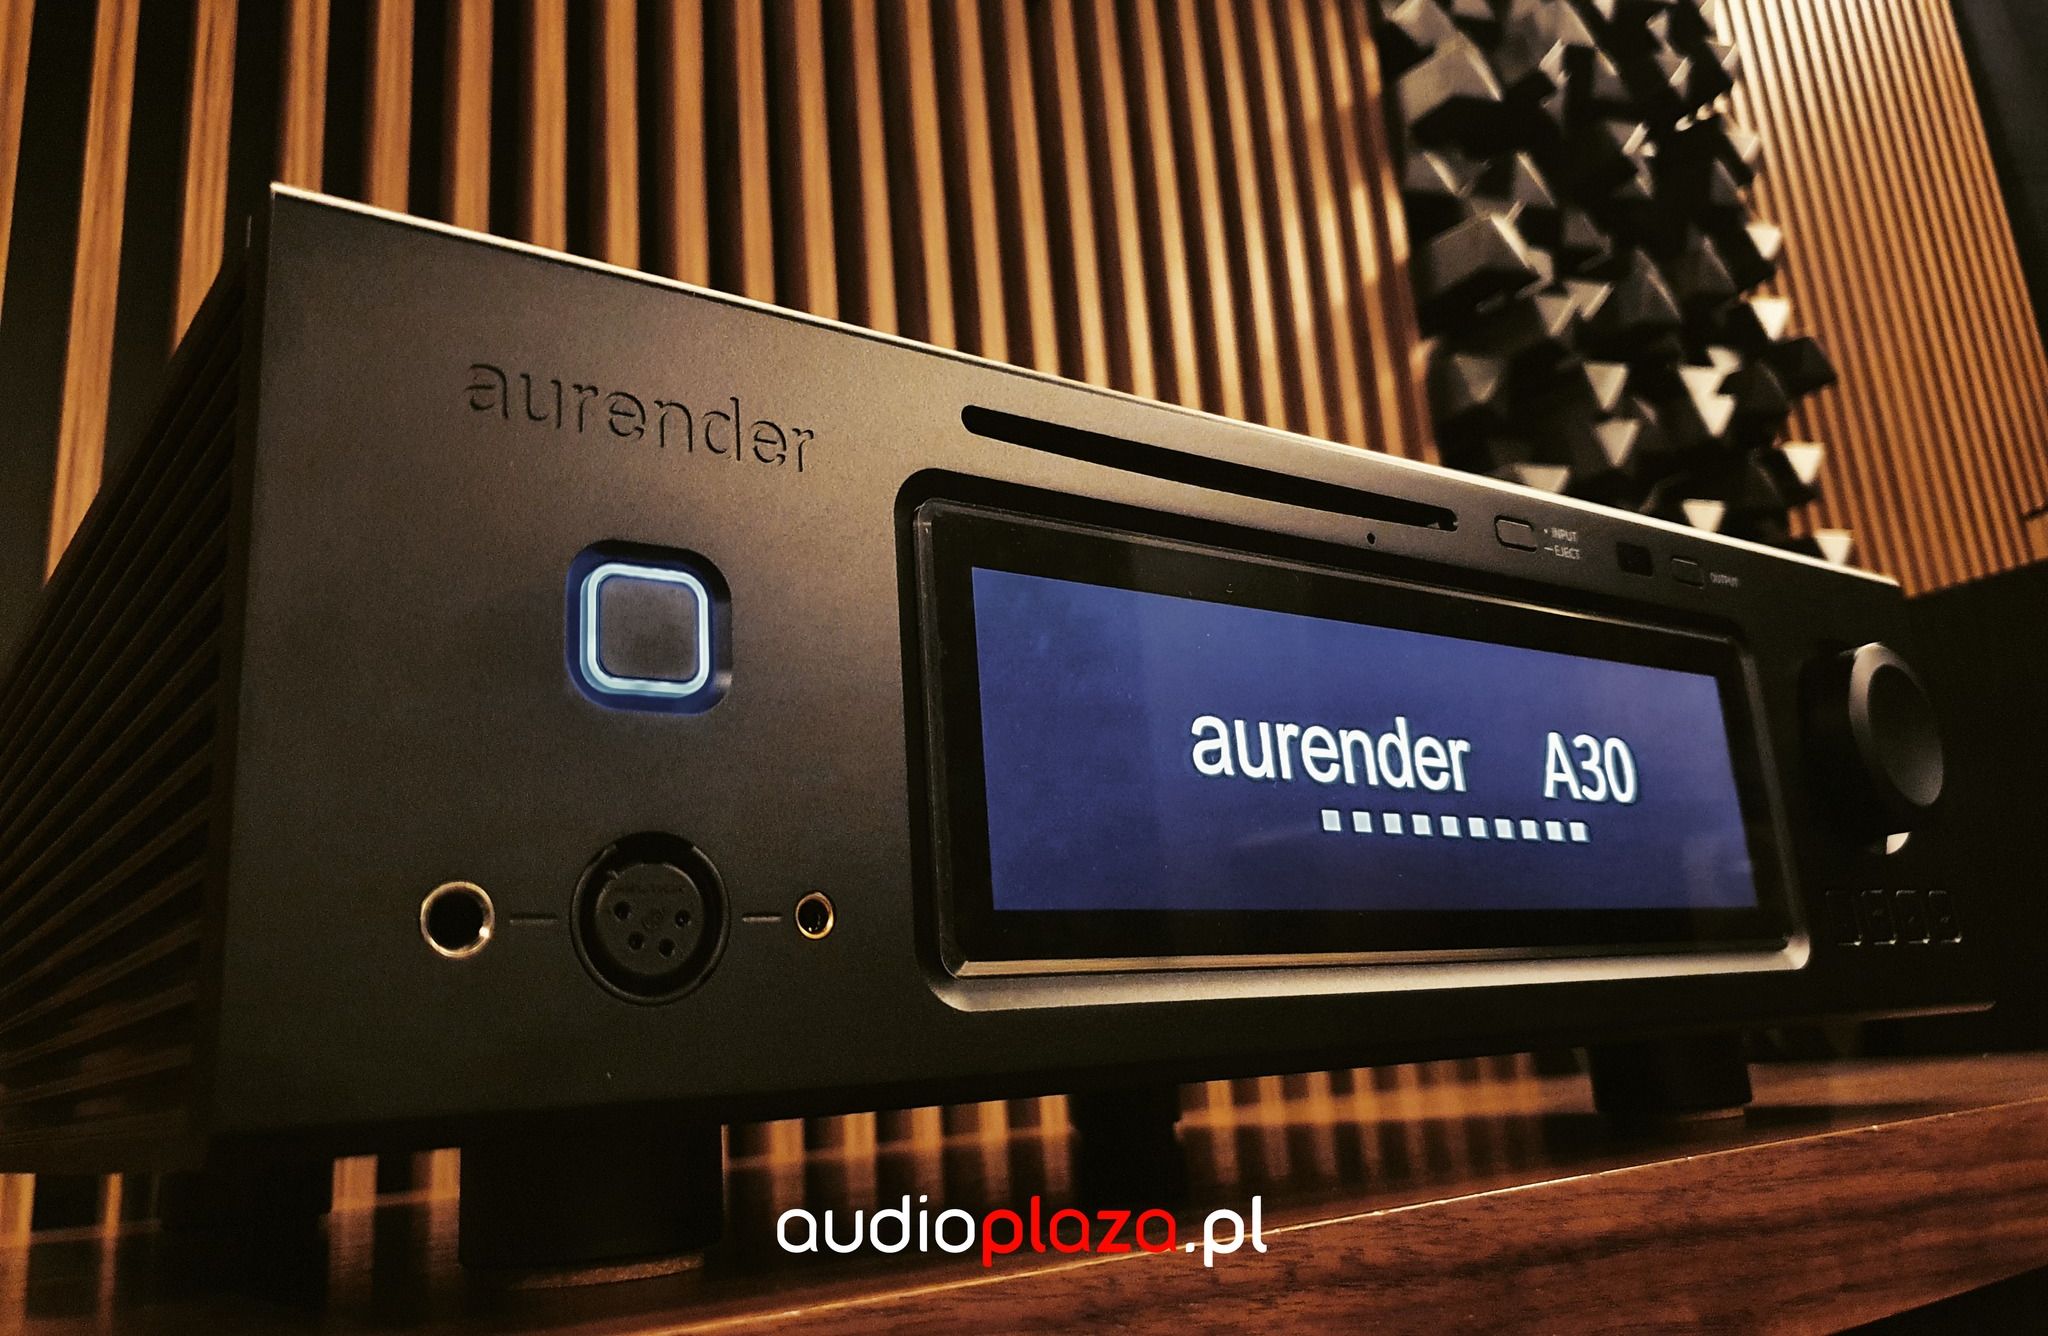 aurender-a30-audioplazapl-fot2.jpg.d4ebe1ce84e954bfddee1296edc9df87.jpg